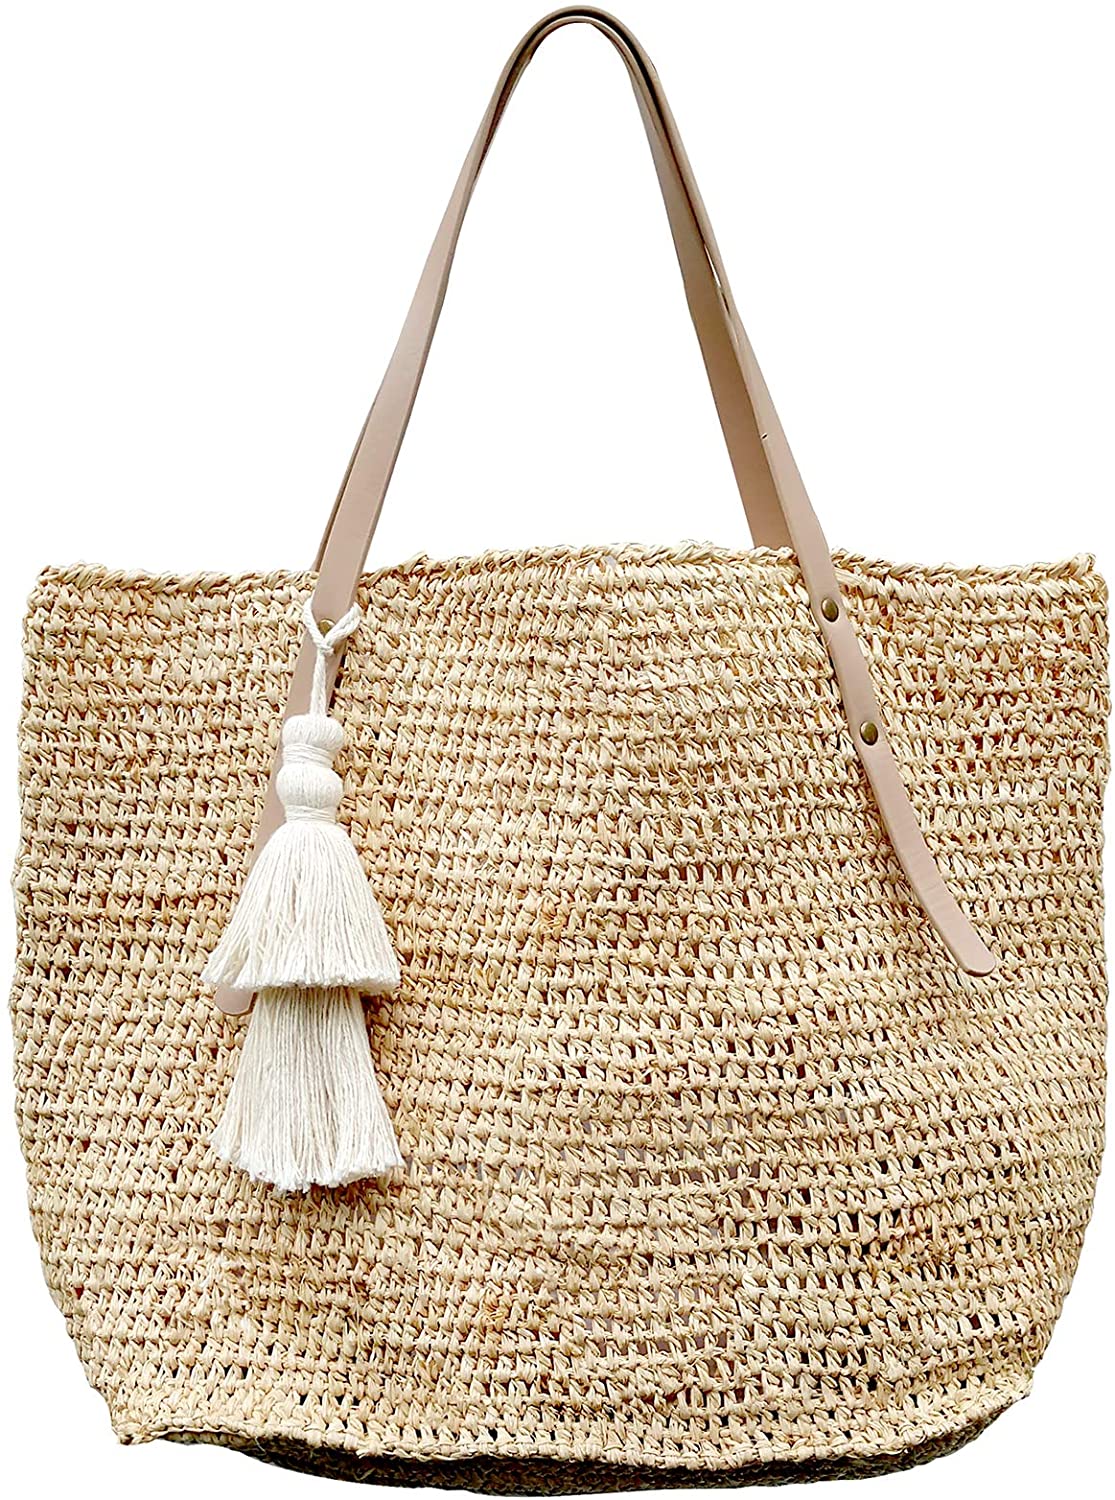 Price:$49.00 Straw Beach Bag Tote Leather Handles Shoulder Bag Women's (Natural/Natural)  Handbags   